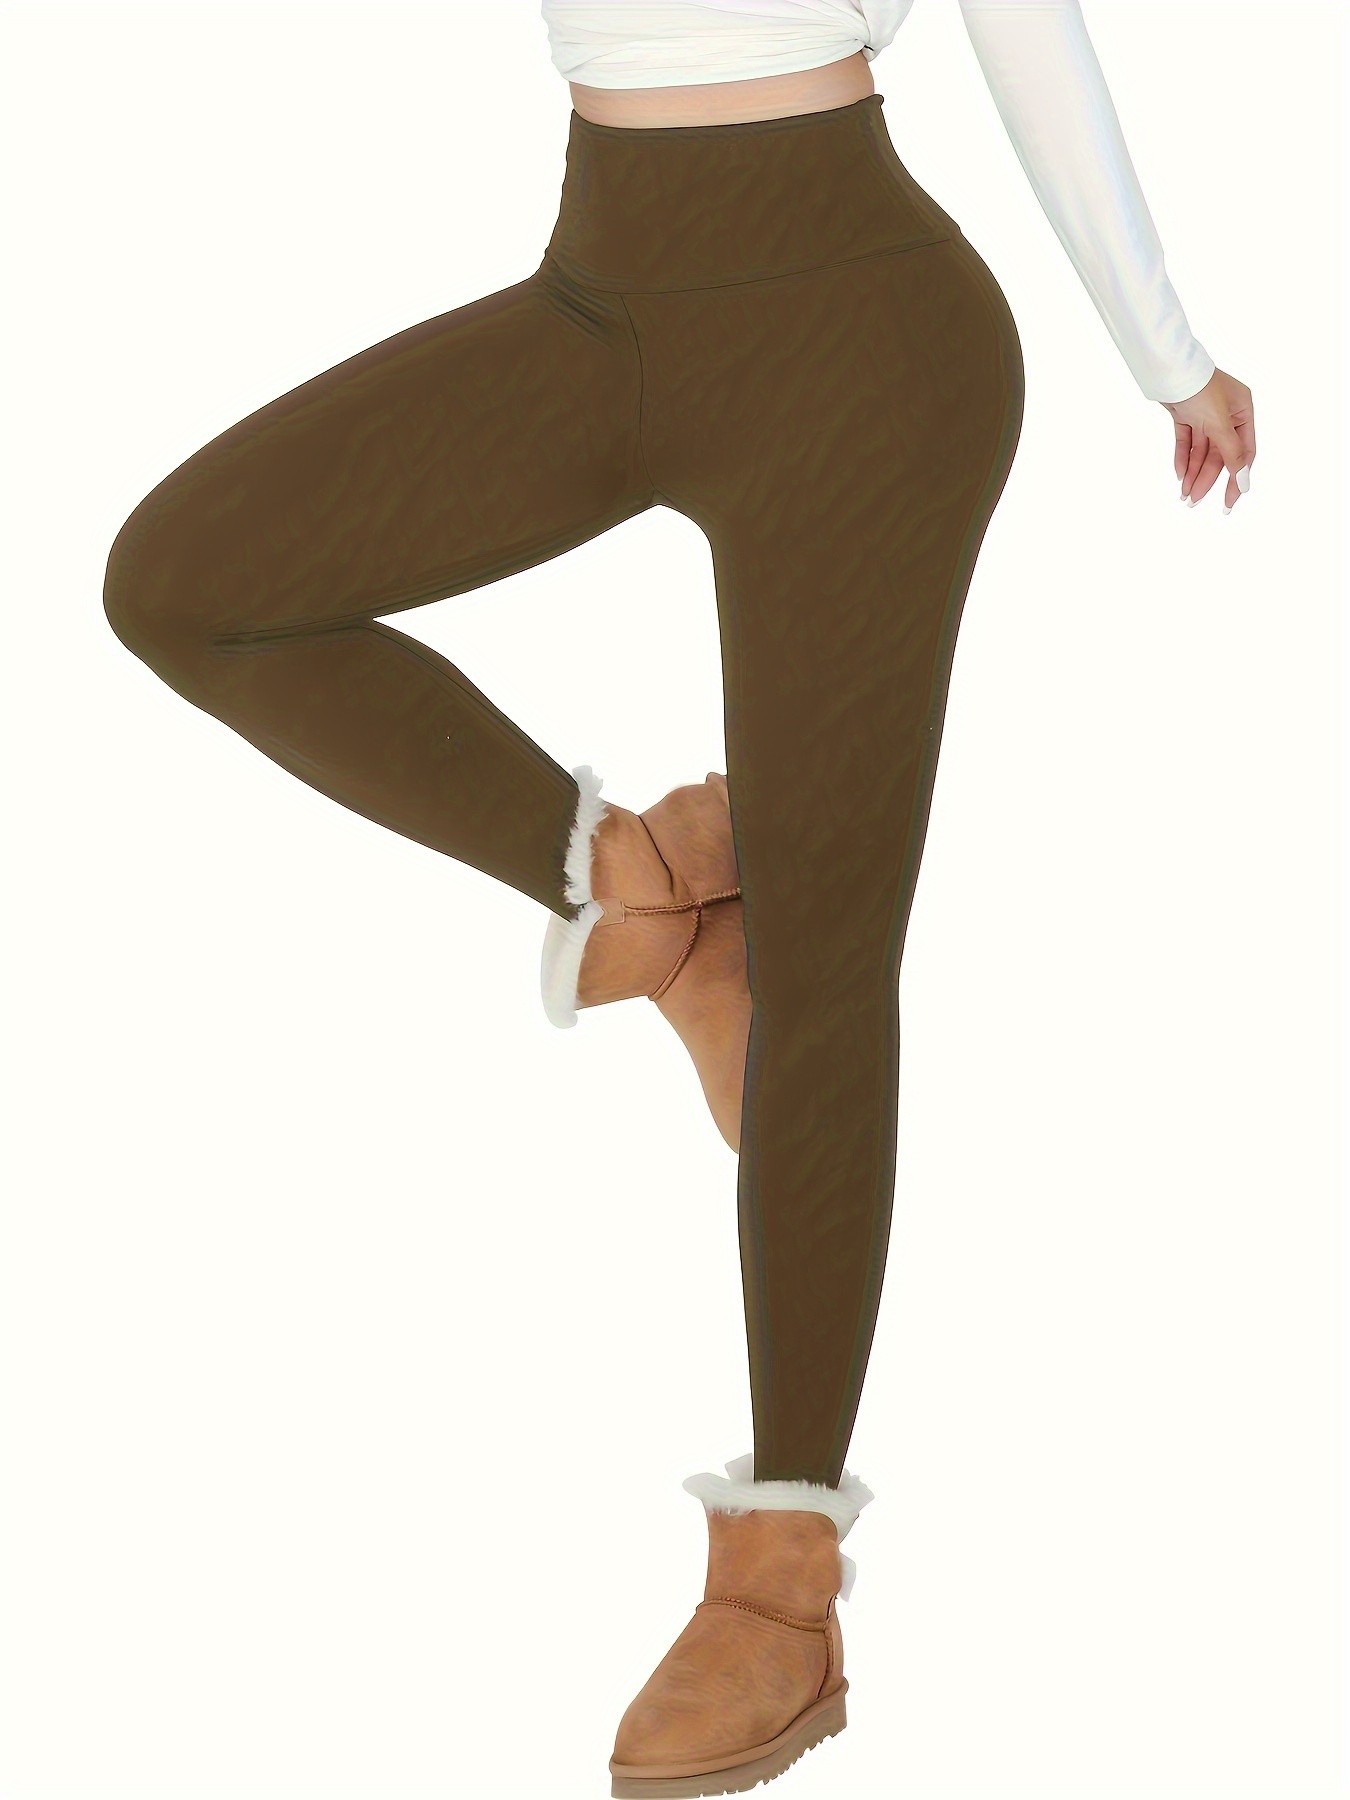 Alove Women's Ribbed High Waisted Yoga Pants Thick Fleece Lining